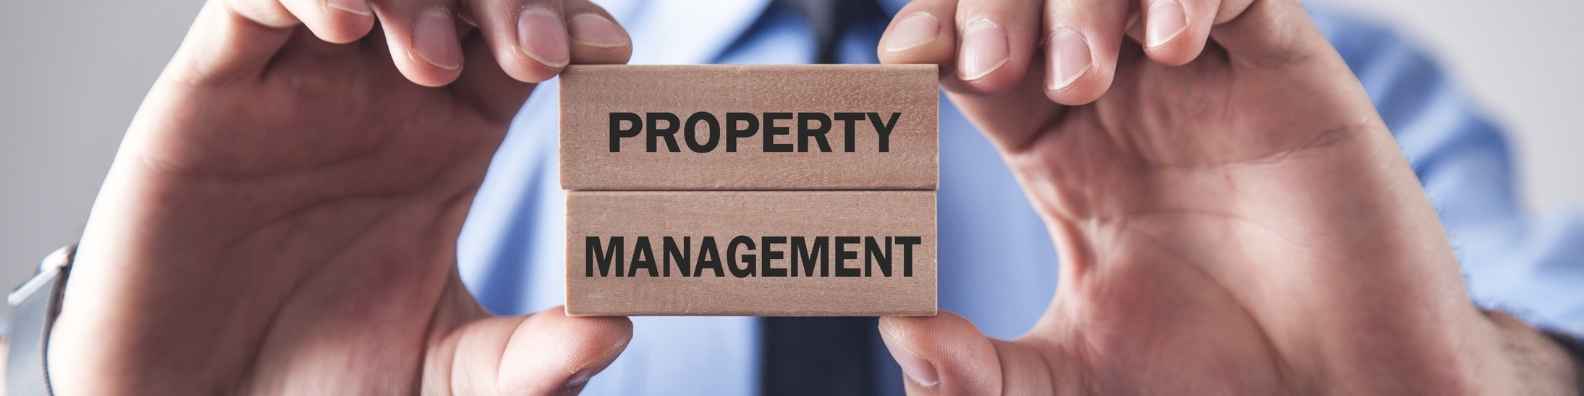 Property Management